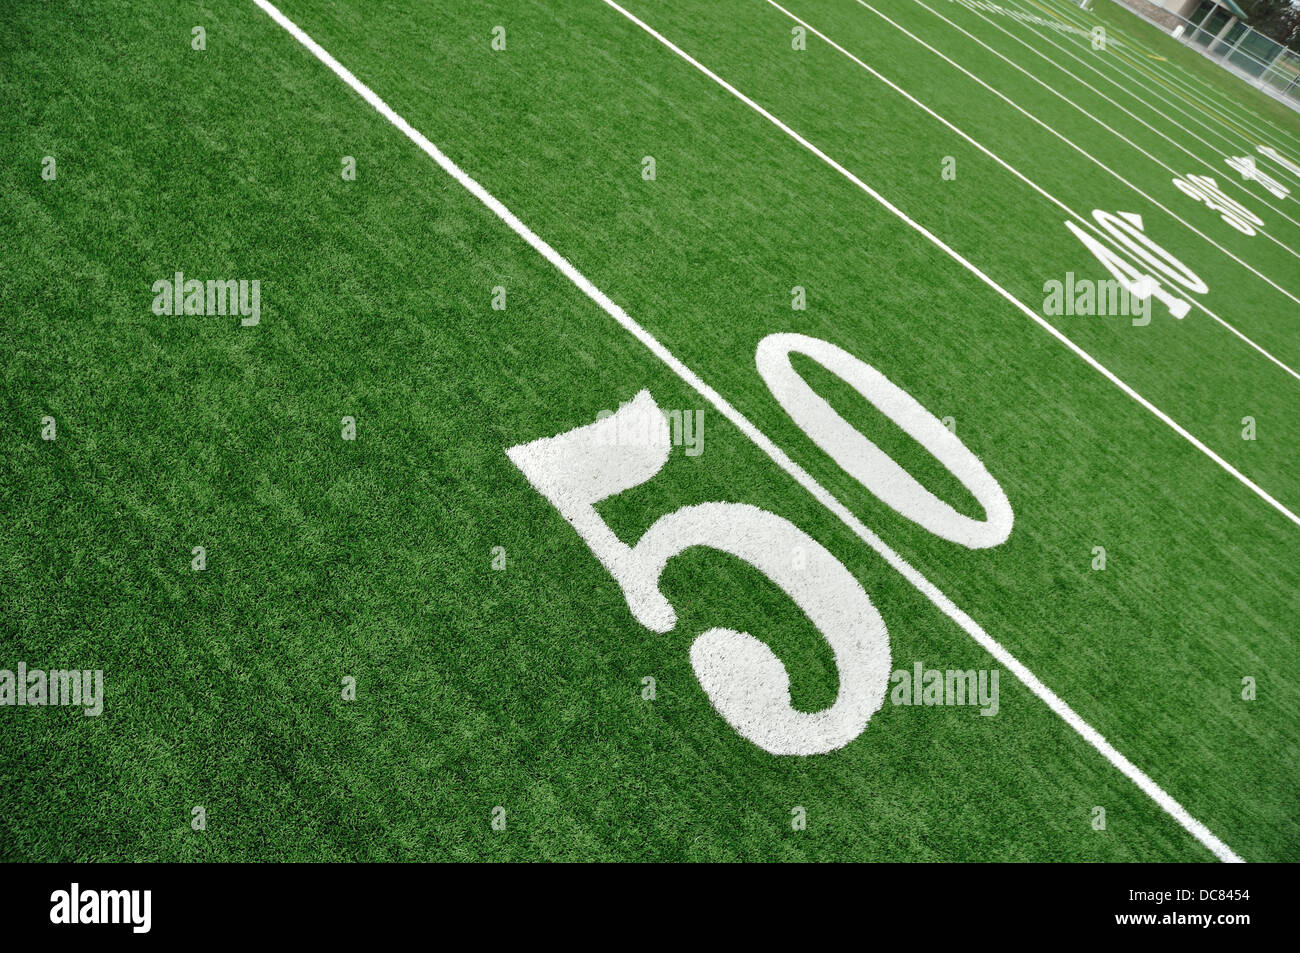 50 yard line on an American football field, USA Stock Photo